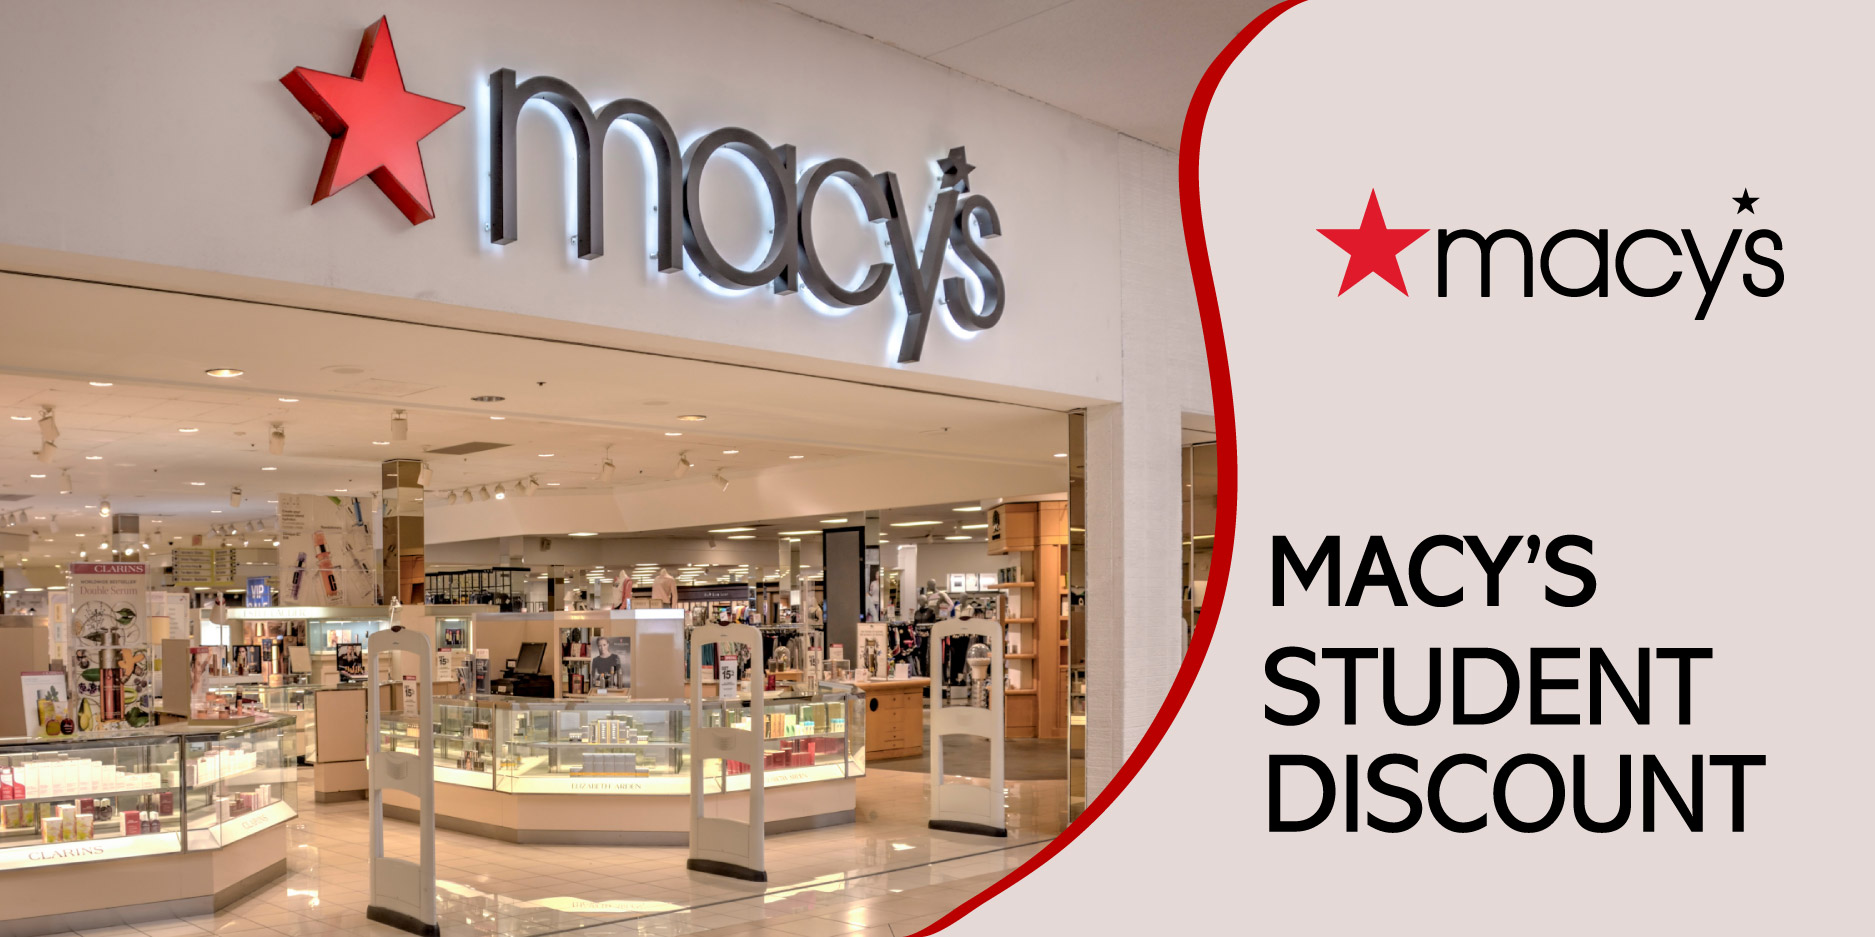 Macy's Student Discount